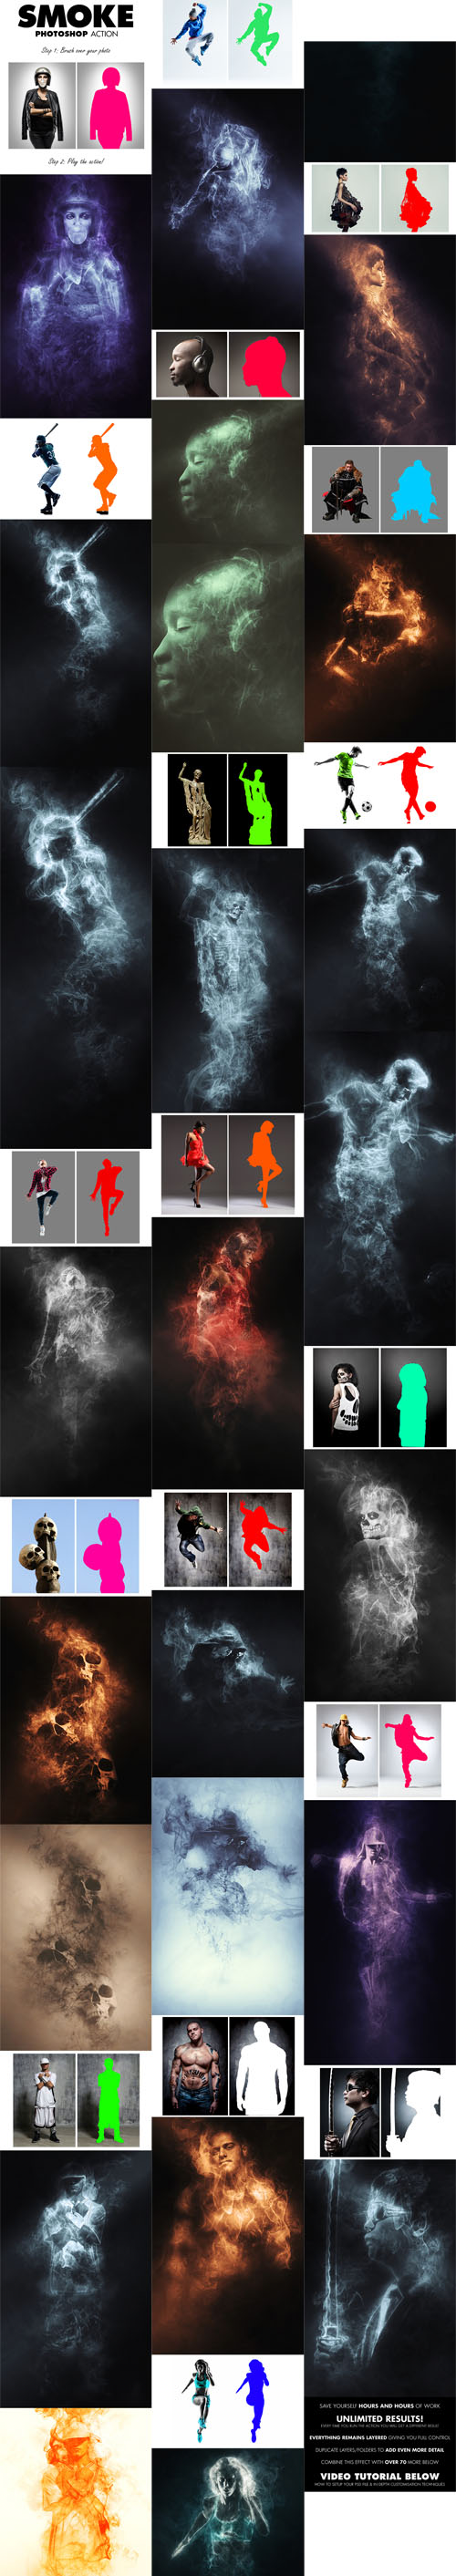 GraphicRiver - Smoke Photoshop Action 14414419